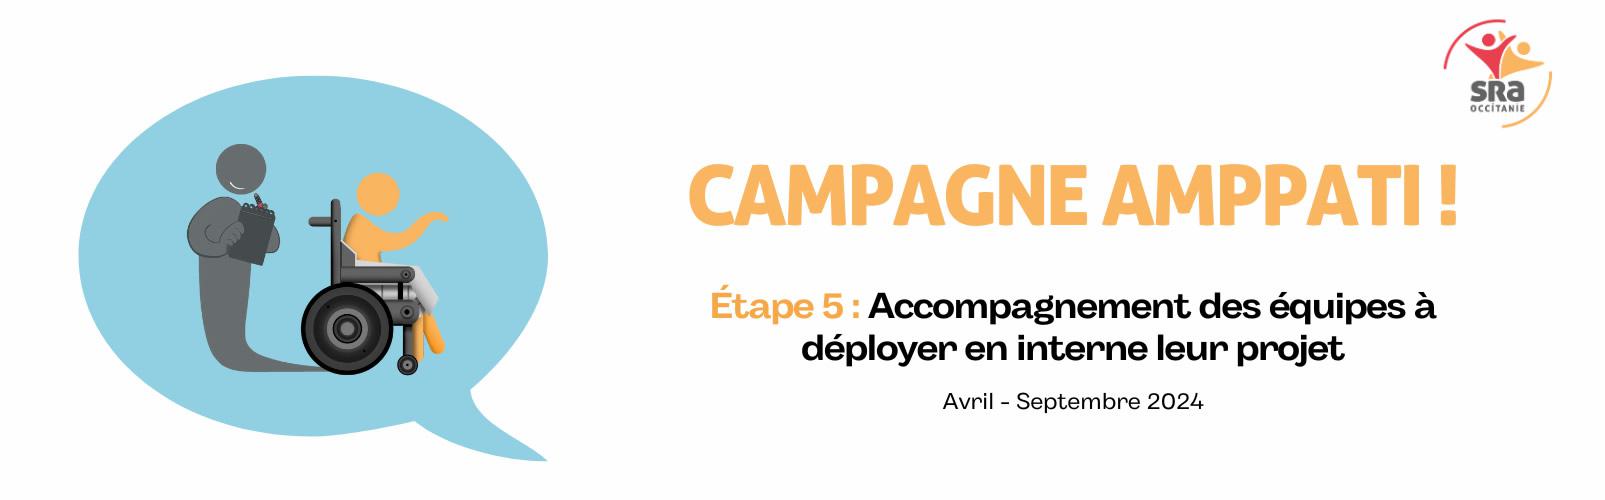 Campagne AMPPATI - Etape 5